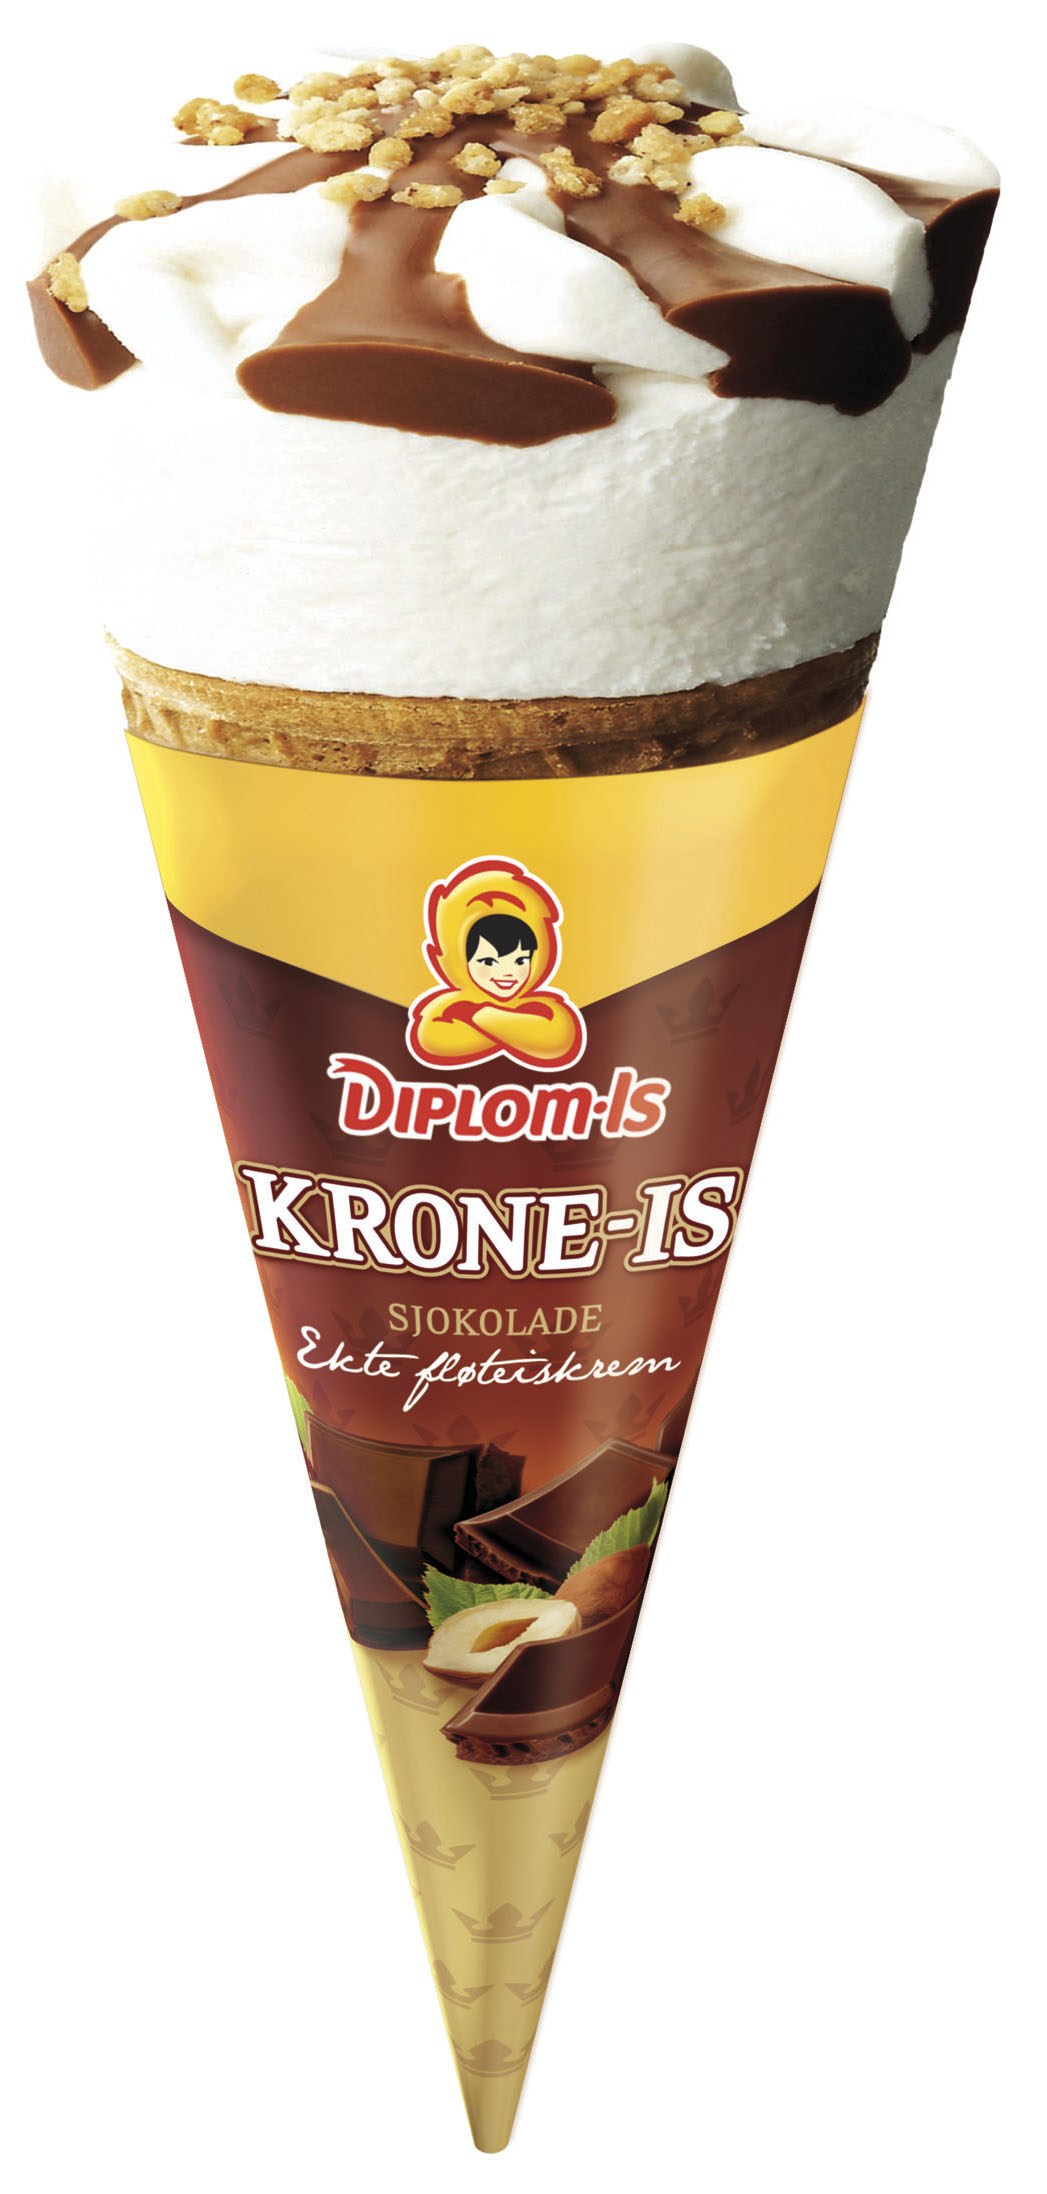 Krone-is sjokolade 28 stk hennig olsen